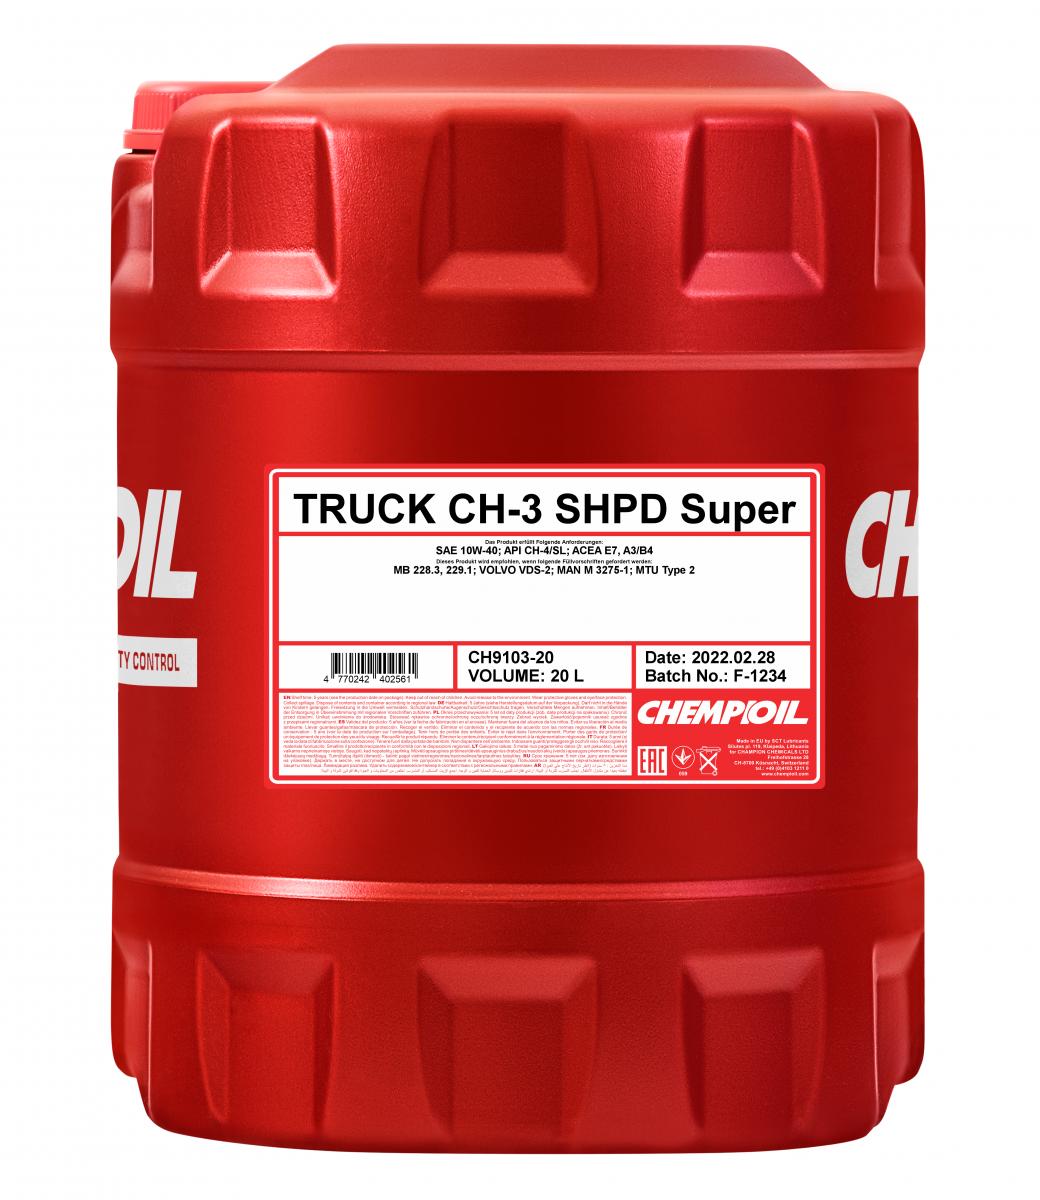 Chempioil 9103 CH-3 Truck Super5 SHPD 10W-40 20L